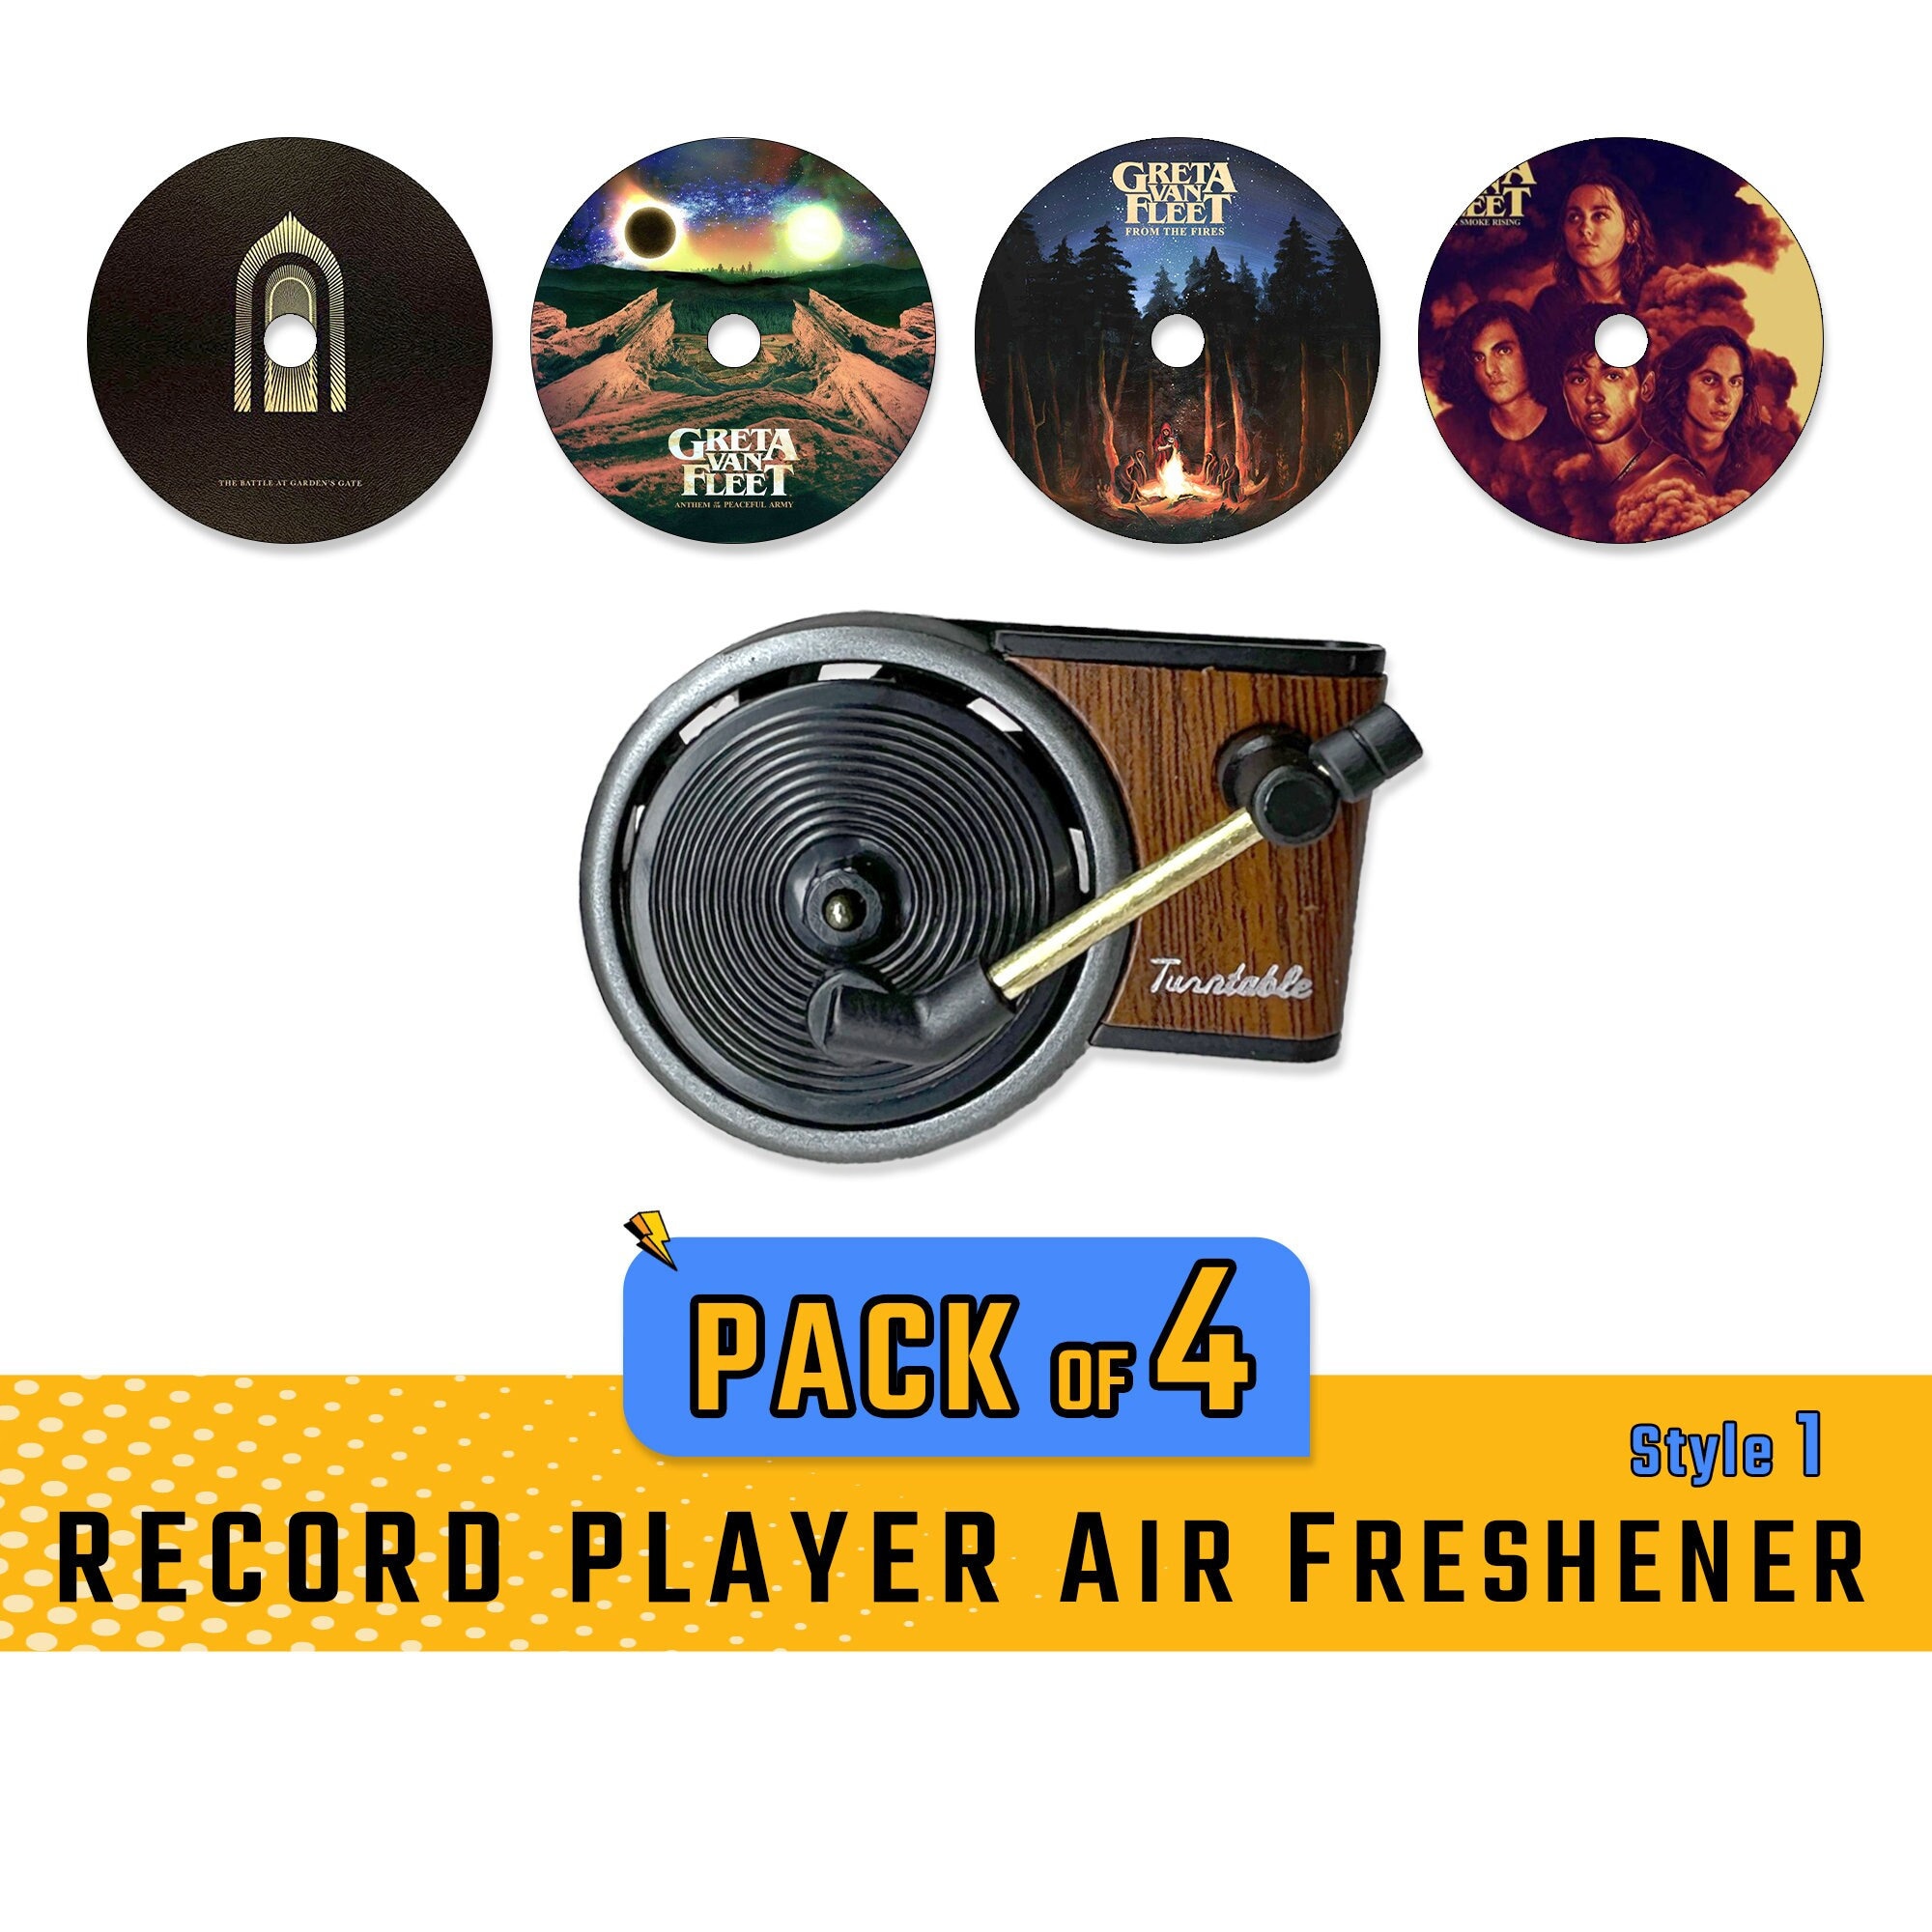 Record player air freshener harry styles - .de